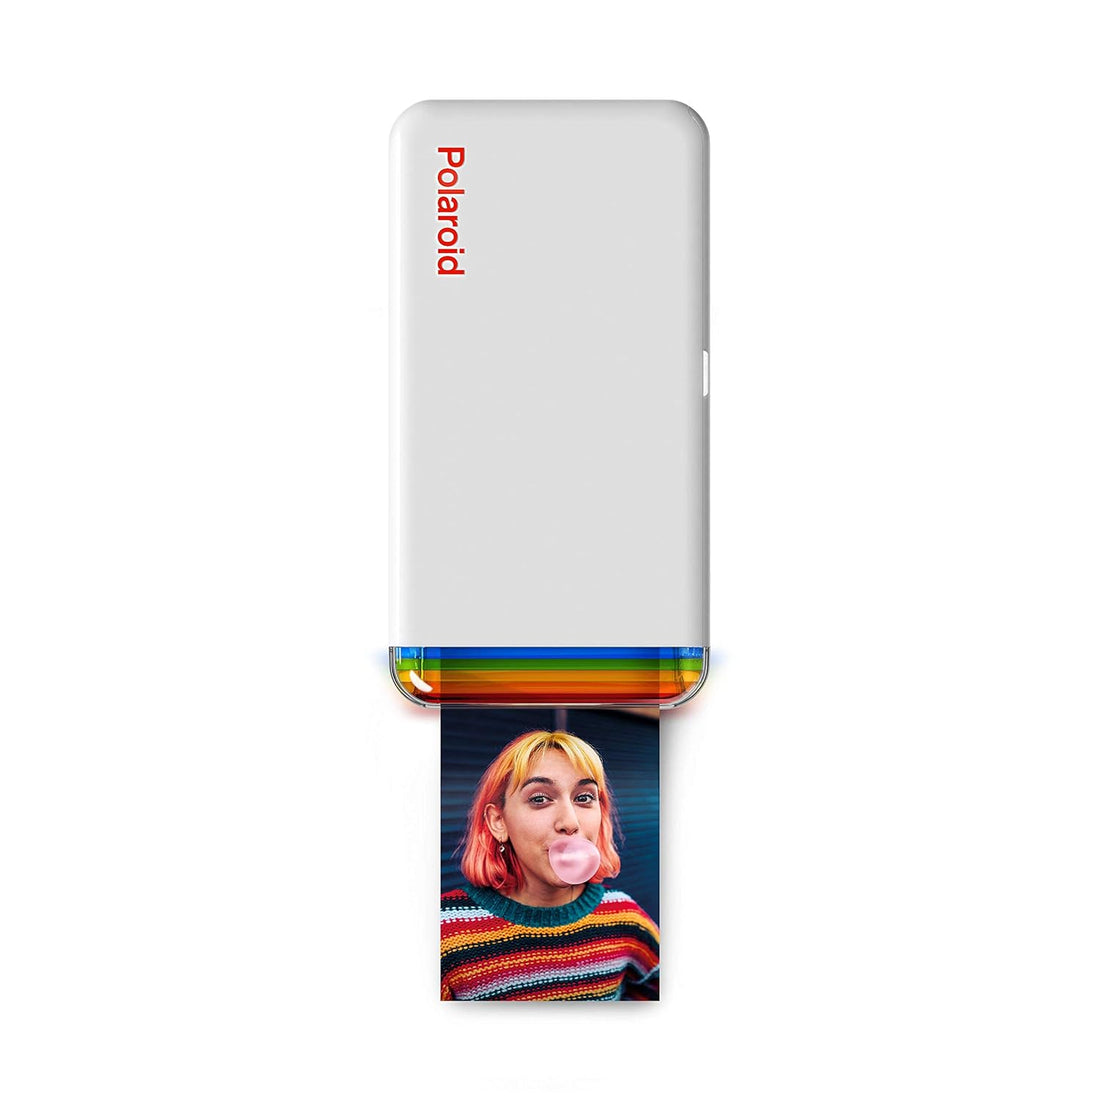 Polaroid Originals Hi-Print - Bluetooth Connected 2x3 Pocket Photo Printer - Dye-Sub Printer (Not Zink Compatible)